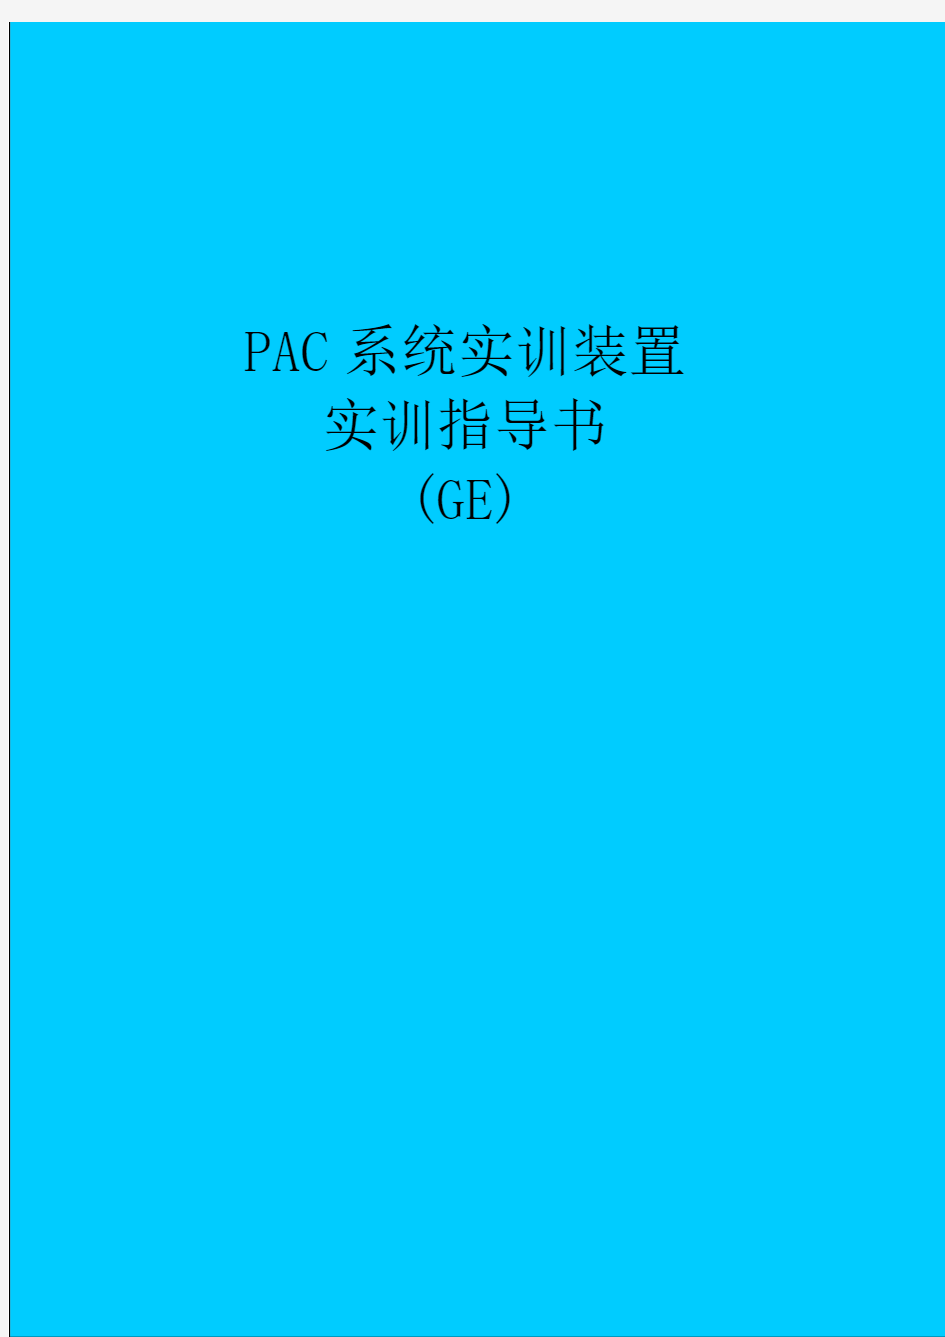 PAC系统实训装置实训指导书(GE)